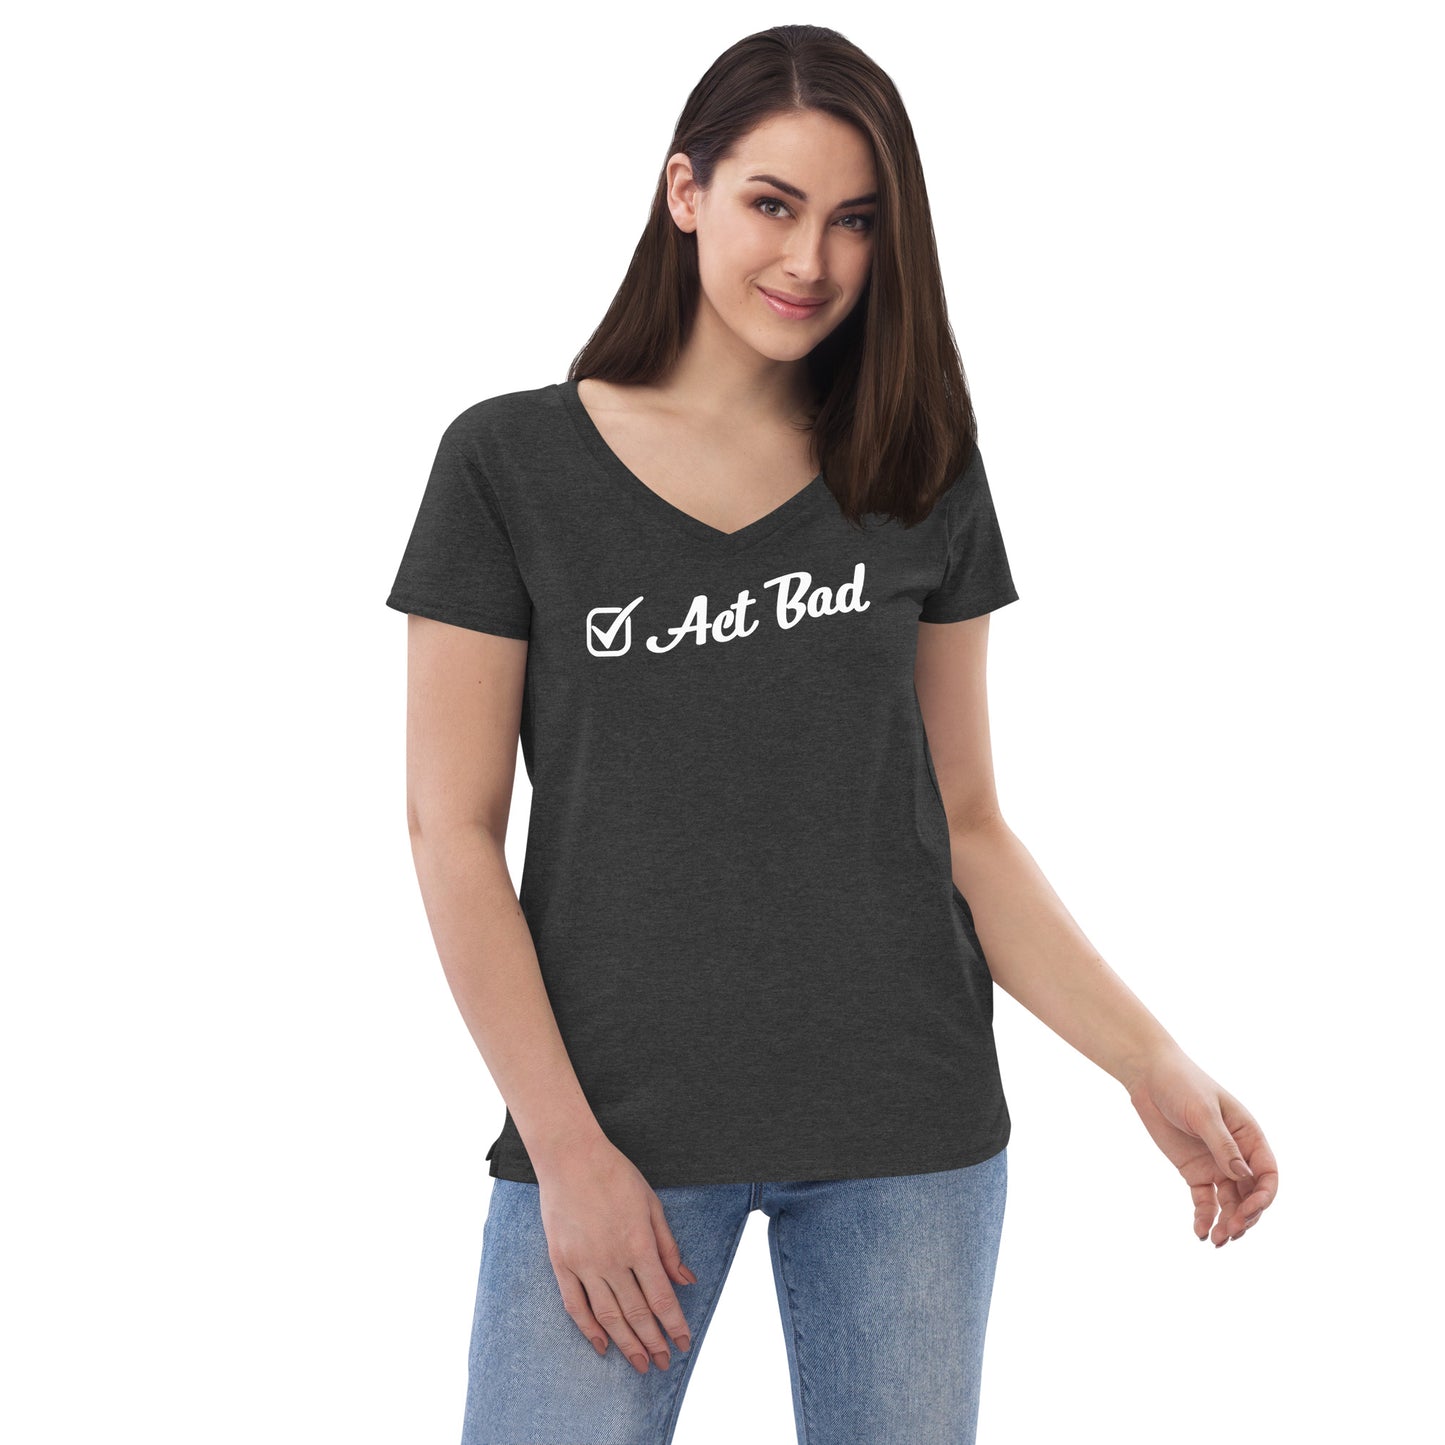 "Act Bad" Women’s V-Neck T-Shirt